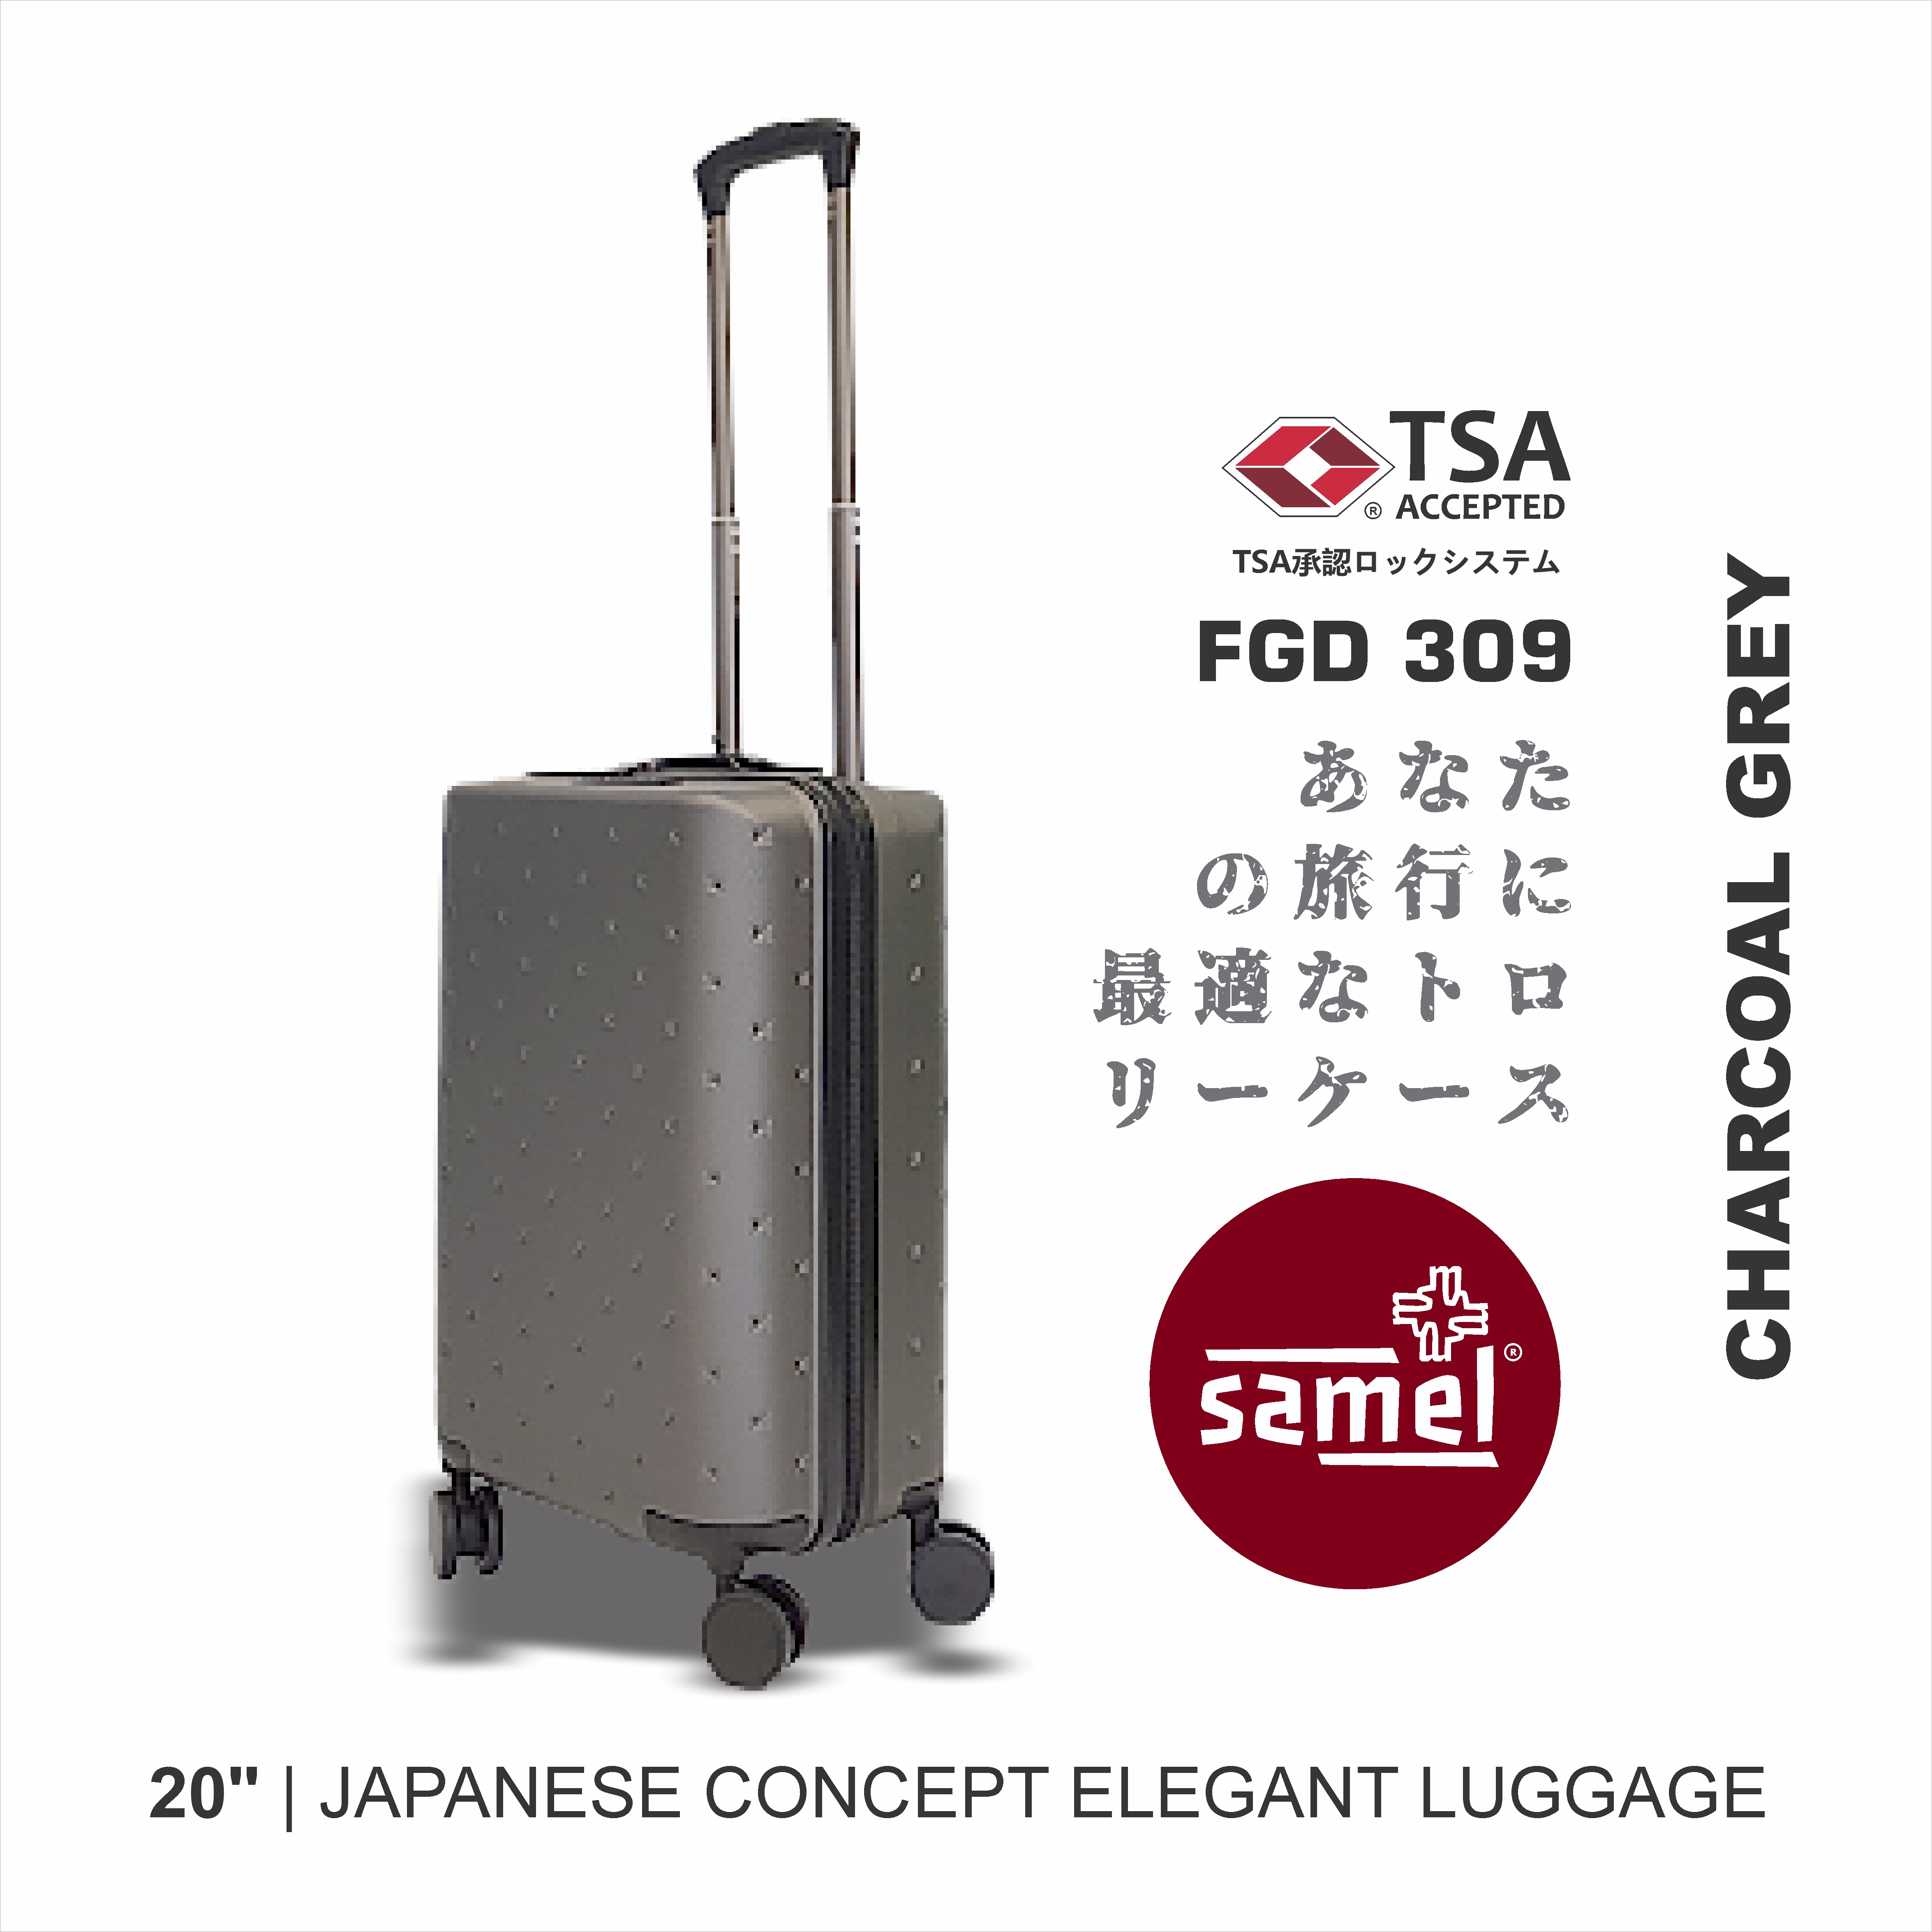 SAMEL 20" FGD 309 JAPANESE CONCEPT ELEGANT LUGGAGE